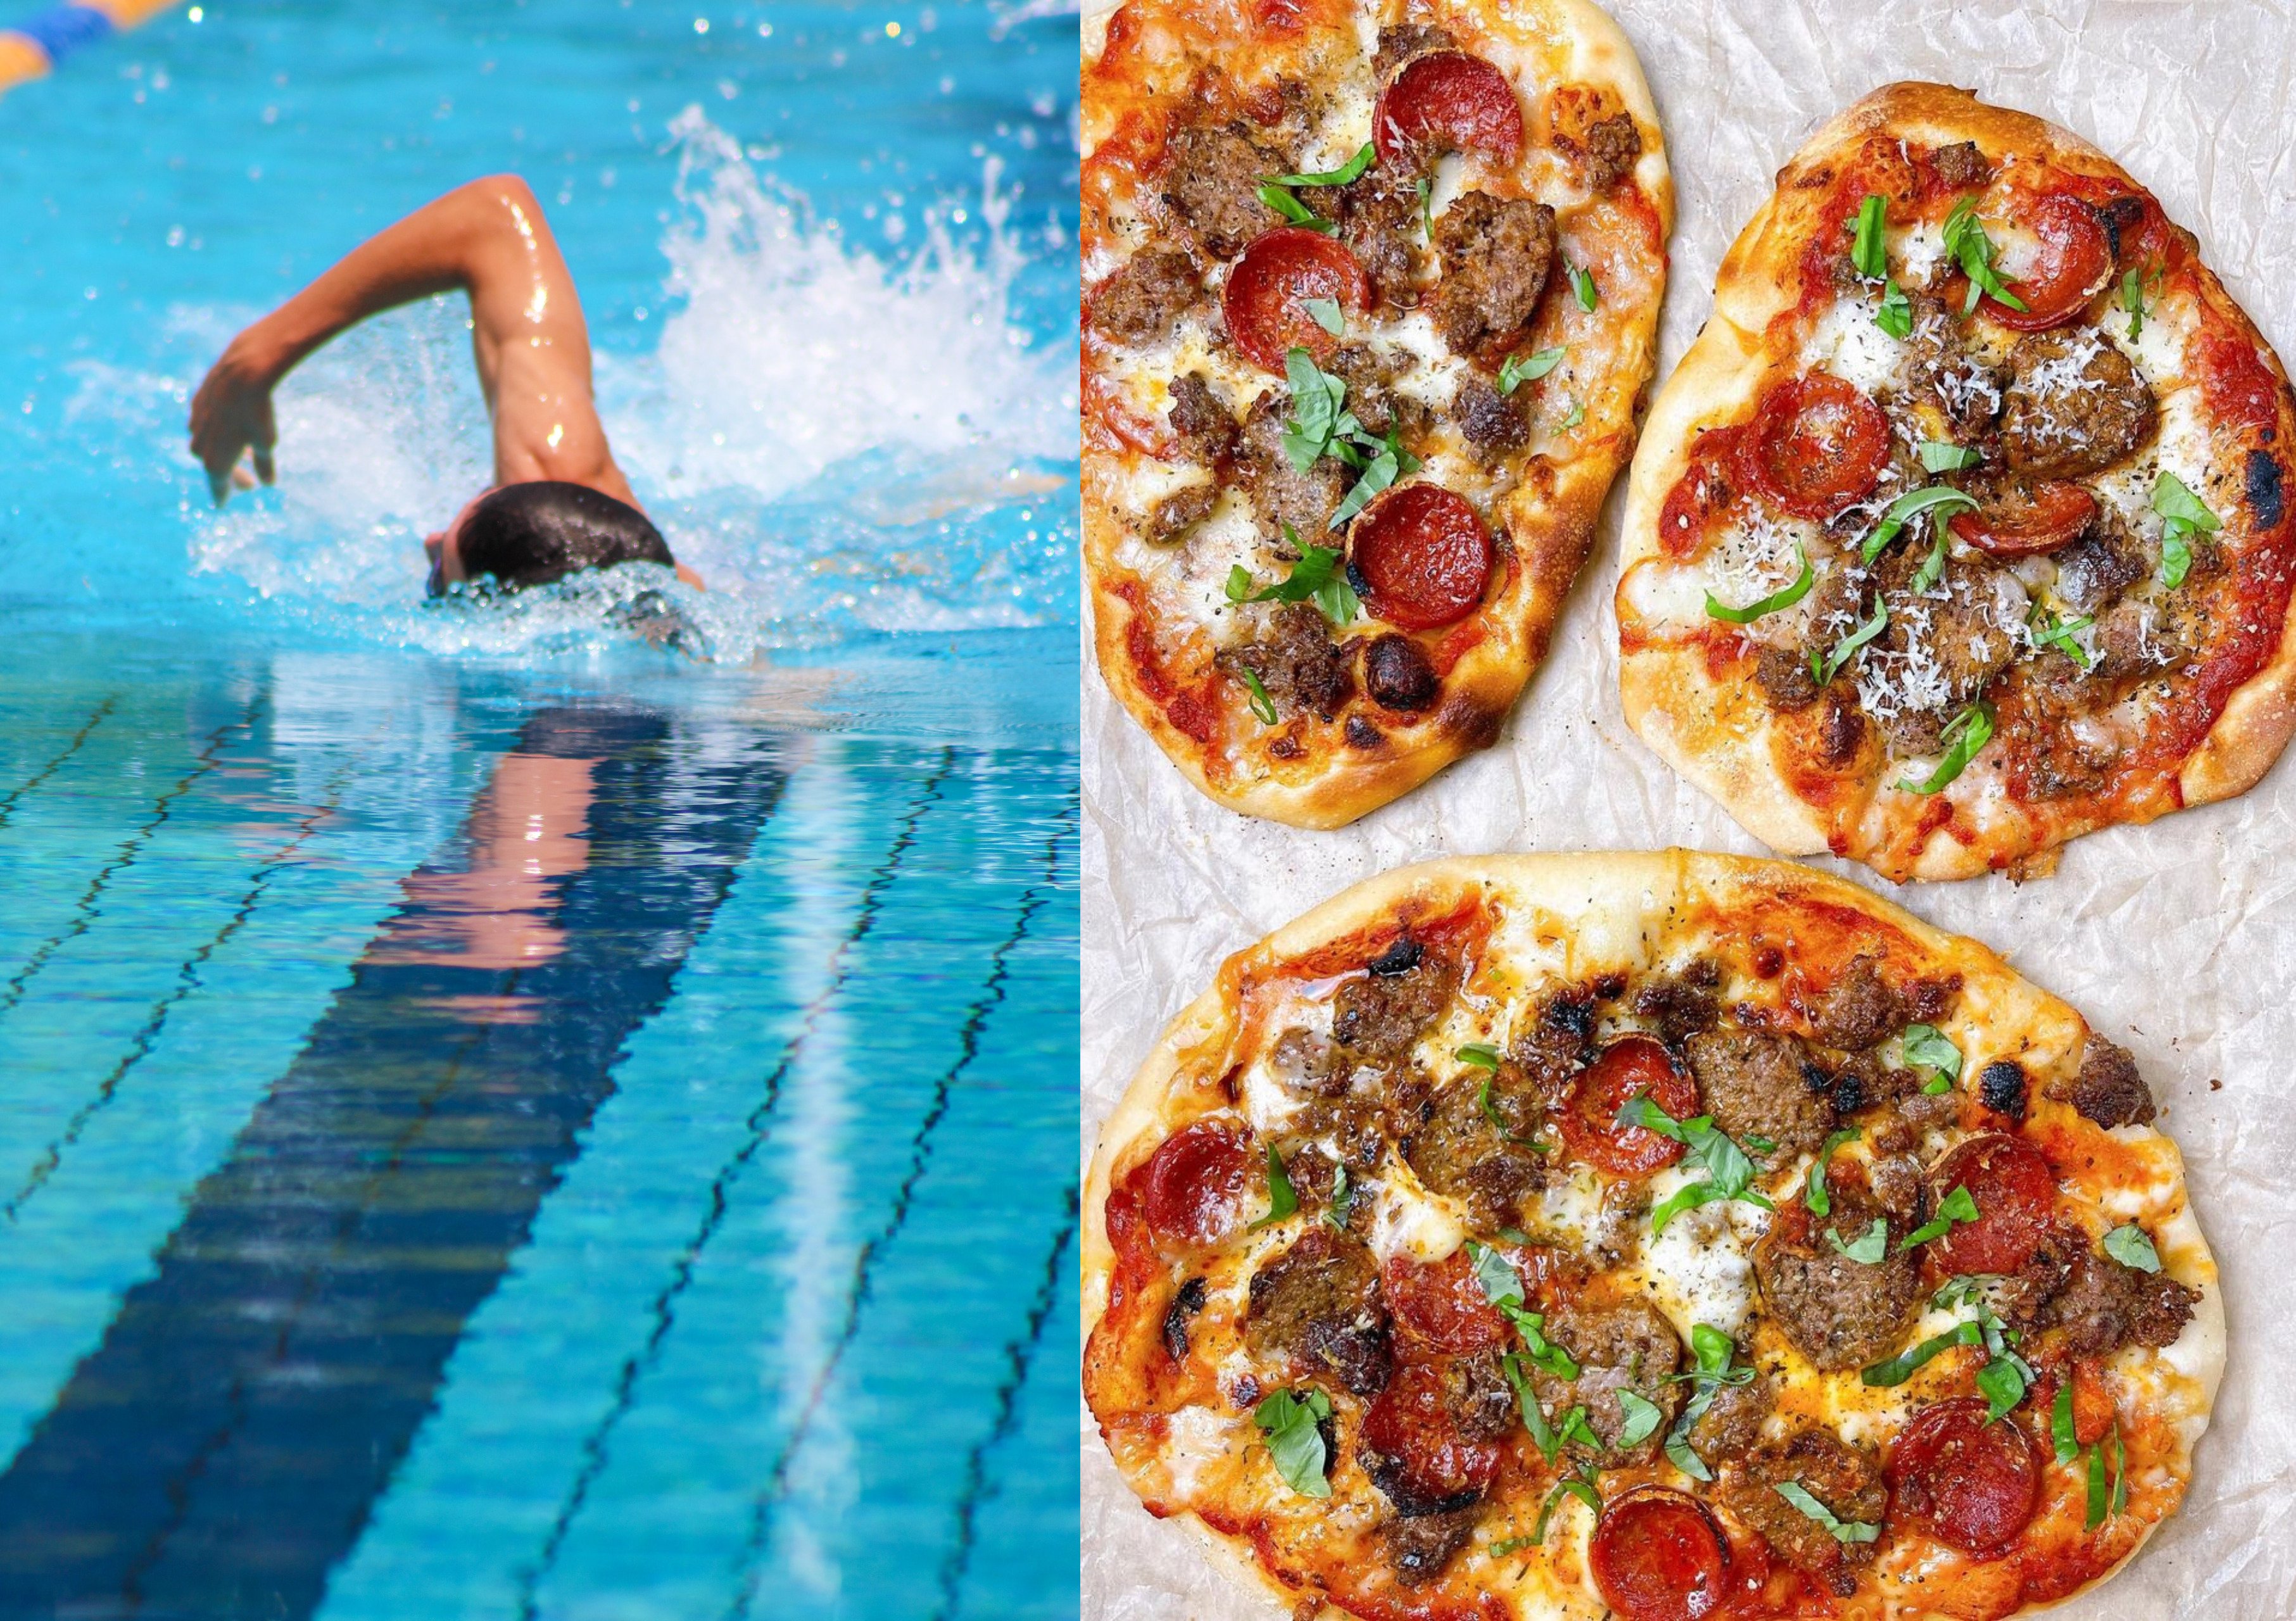 Swimmer in olympic pool alongside Meat Lover’s Pizza | Source: Unsplash - Instagram